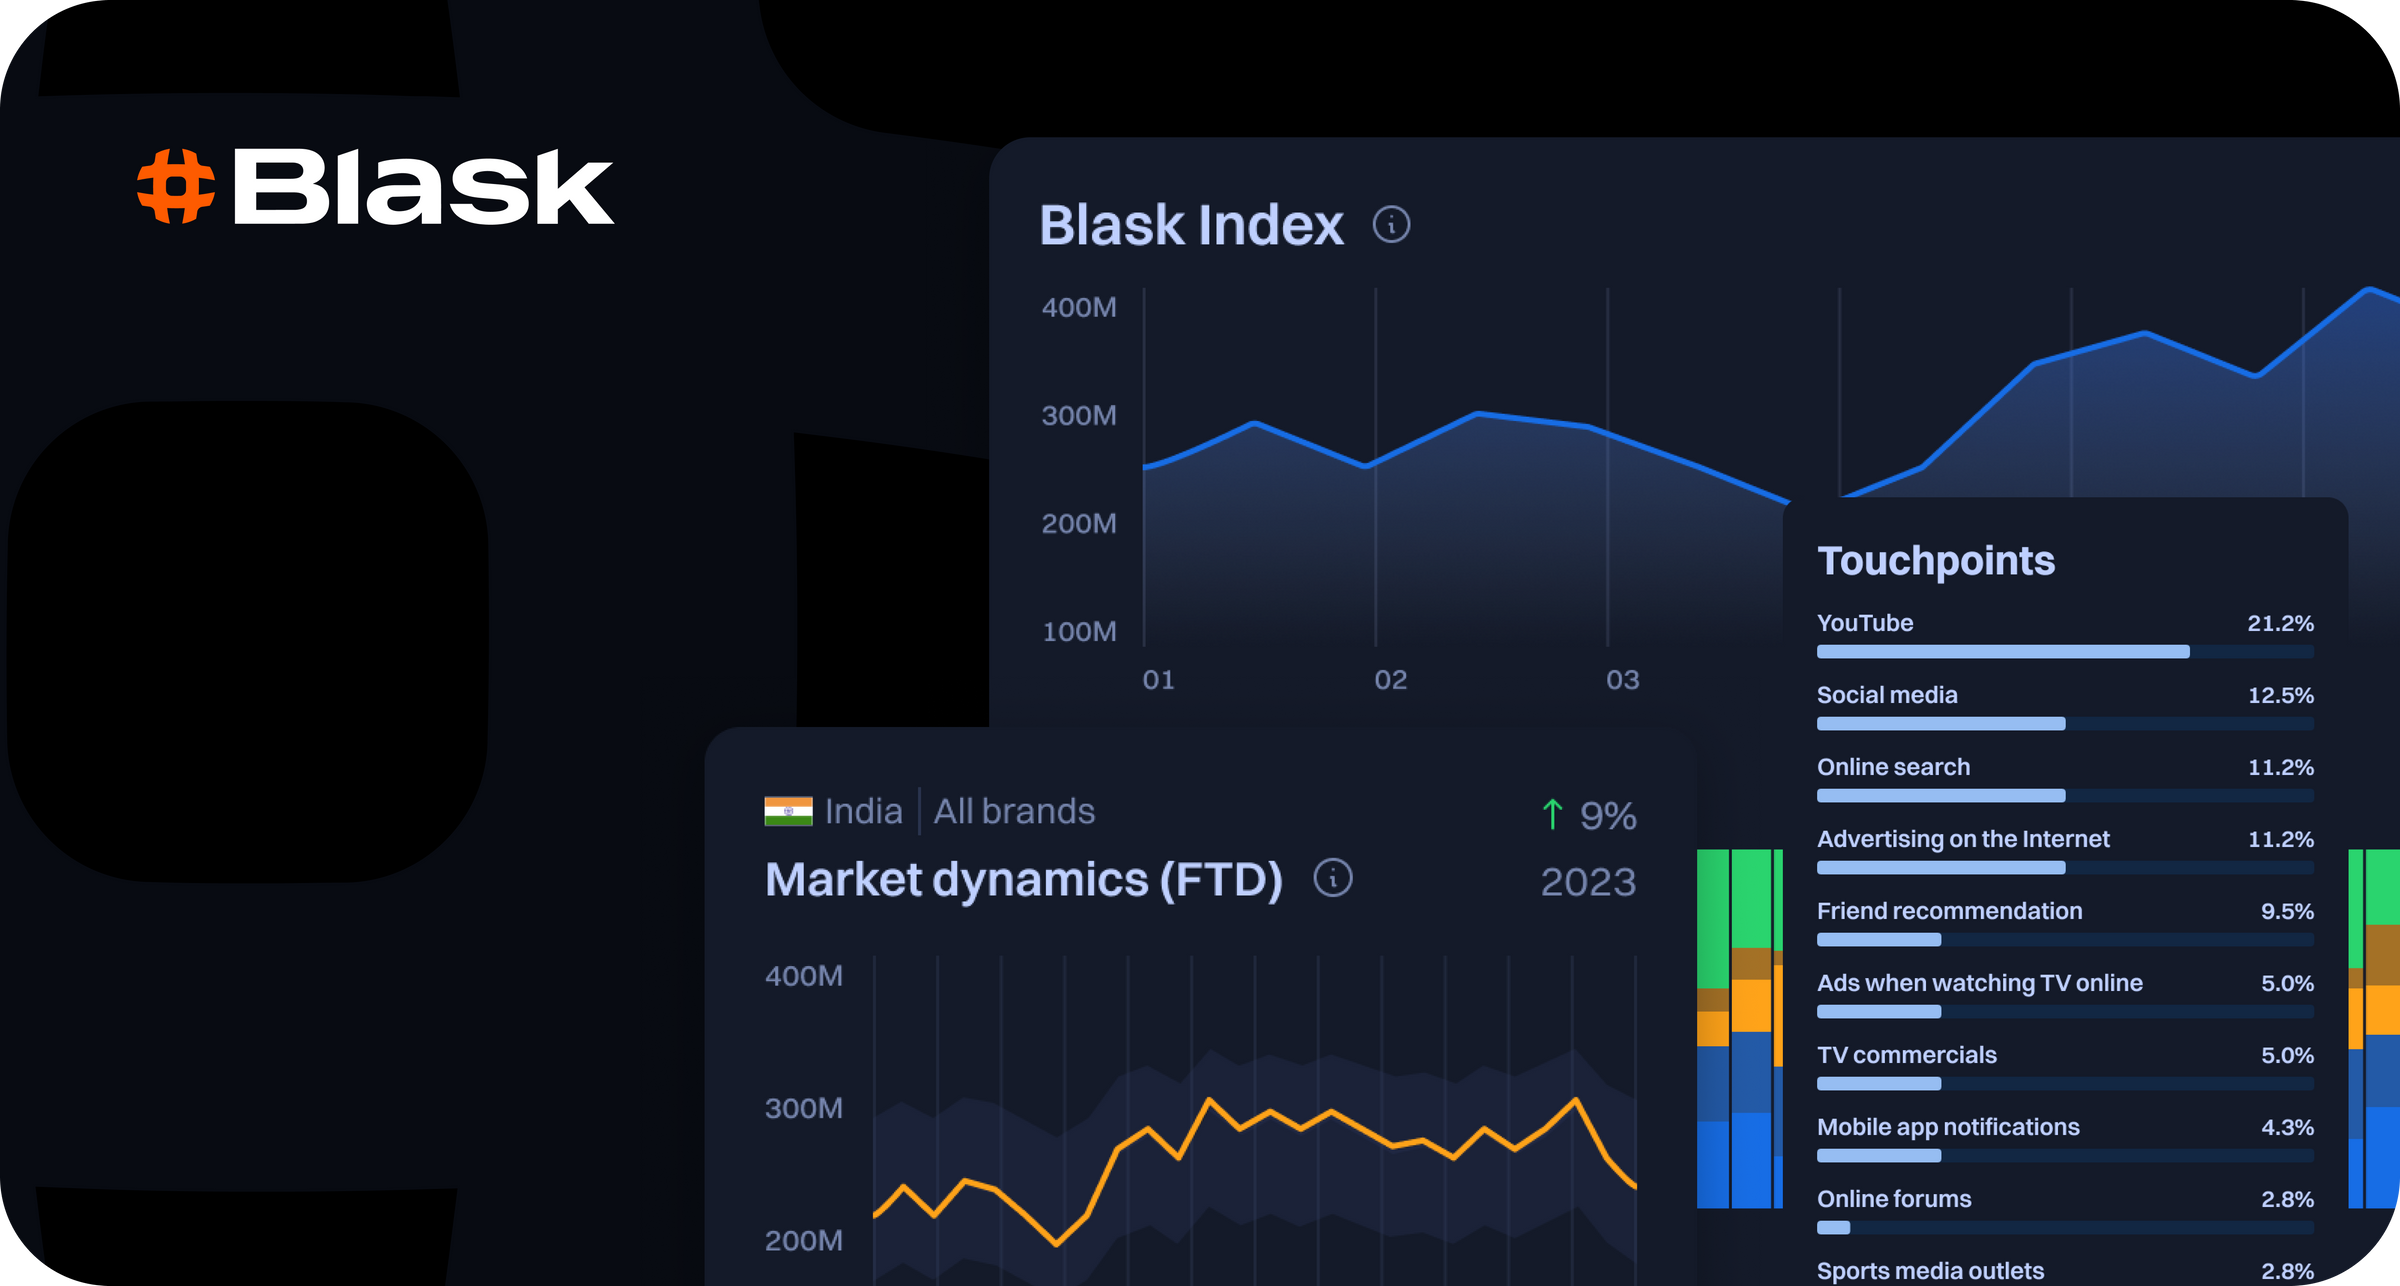 How does Blask analyze the market volume data?